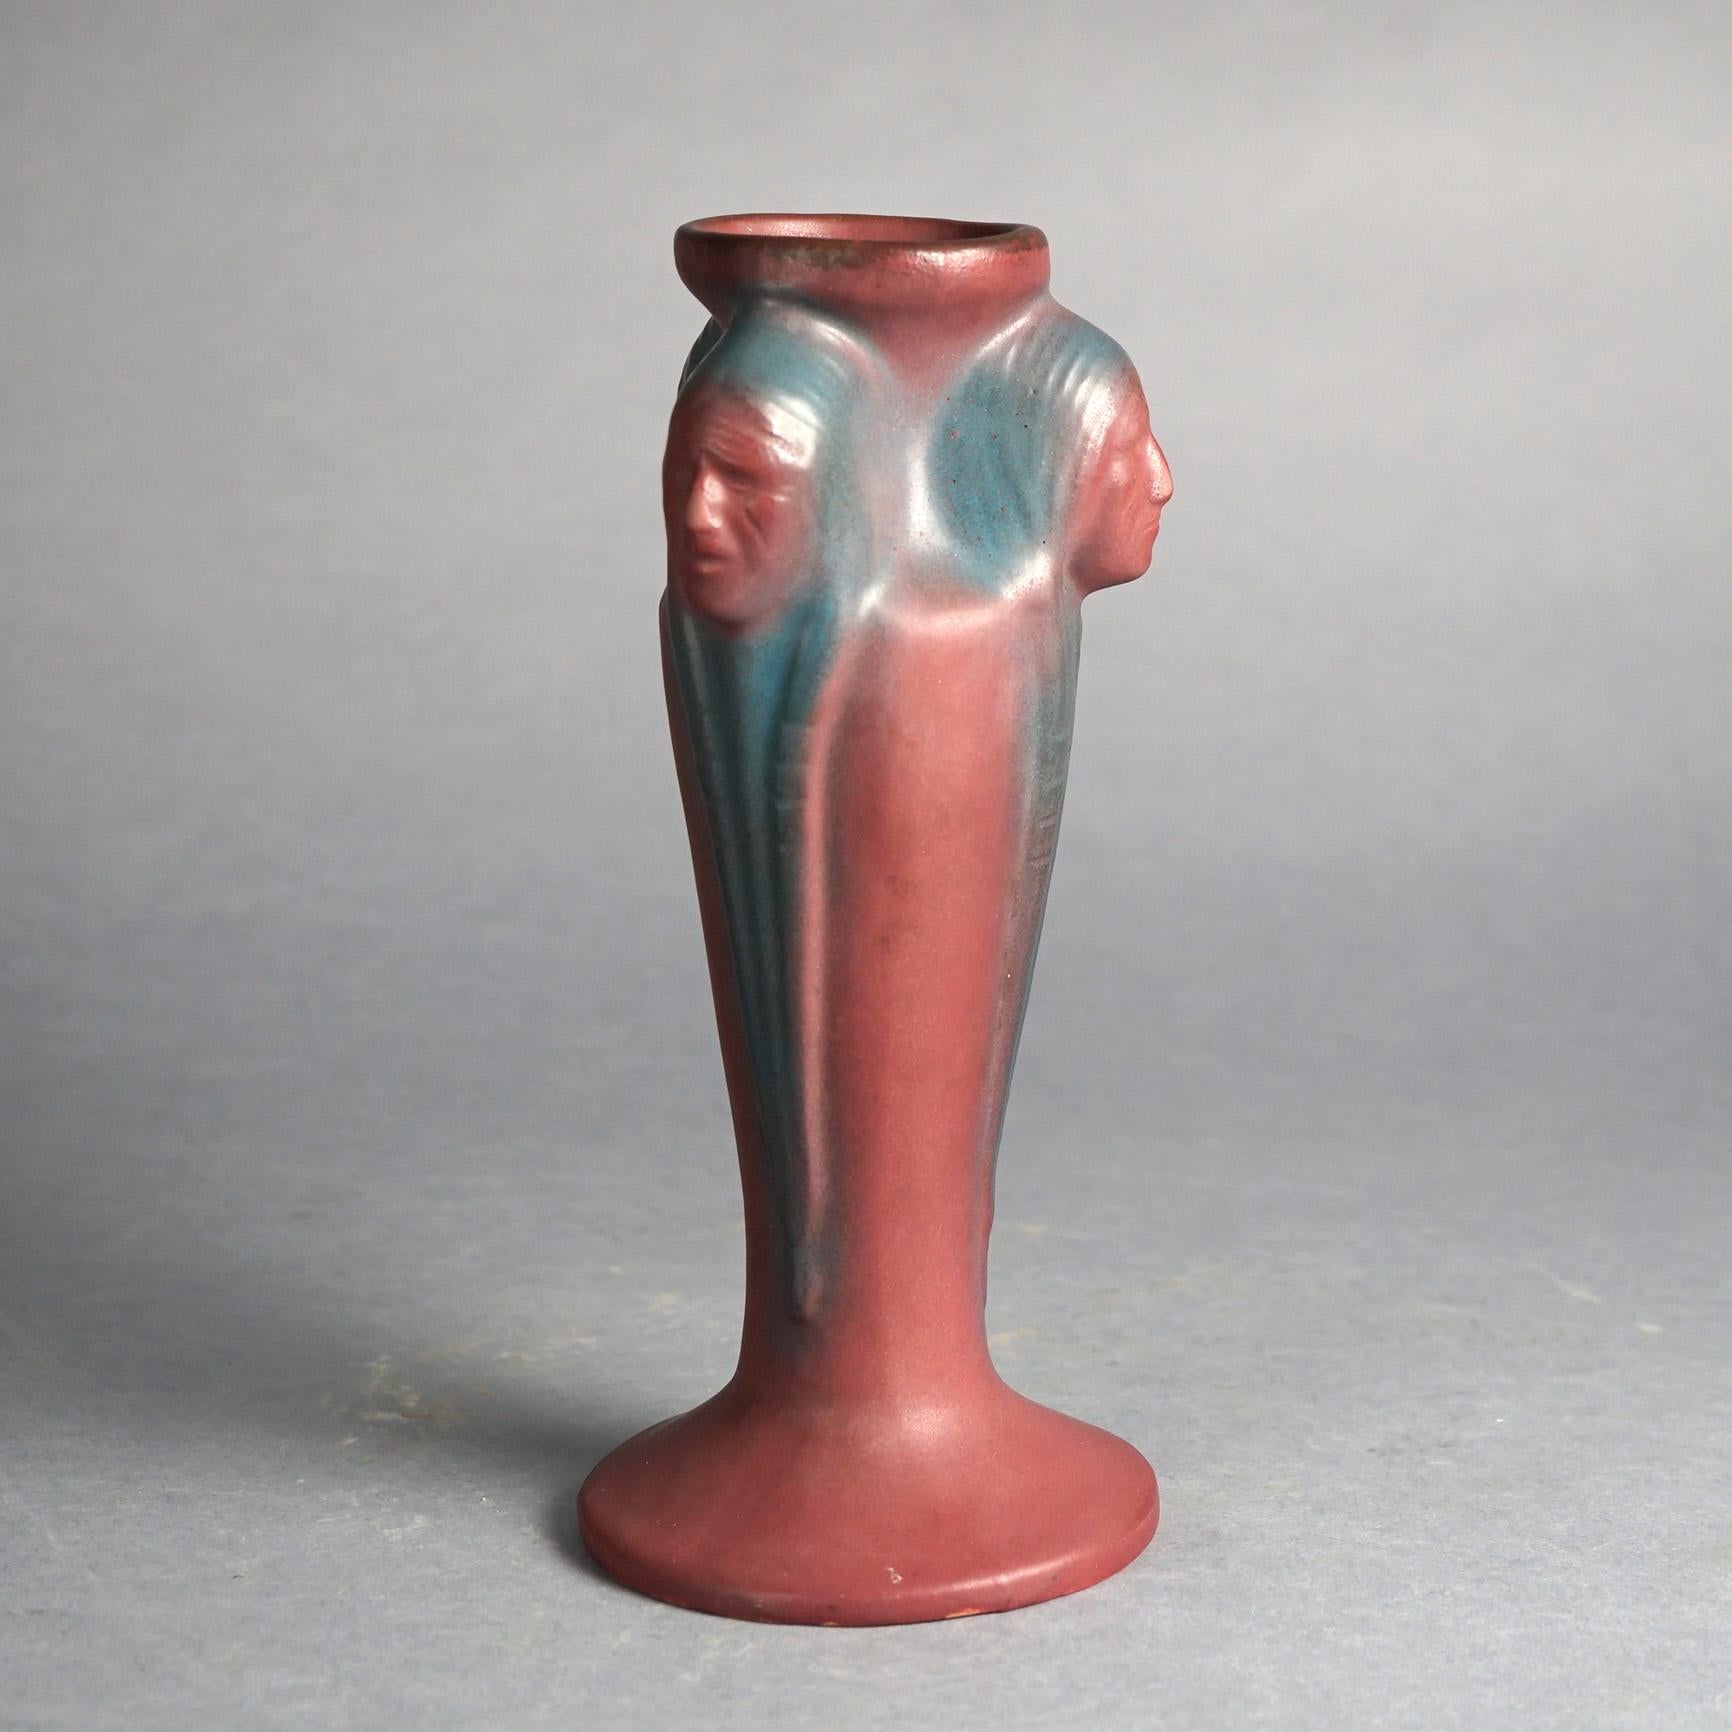 Antique Arts & Crafts Van Briggle Indian Head Figural Pottery Footed Vase, Signed, C1940

Measures - 11.25